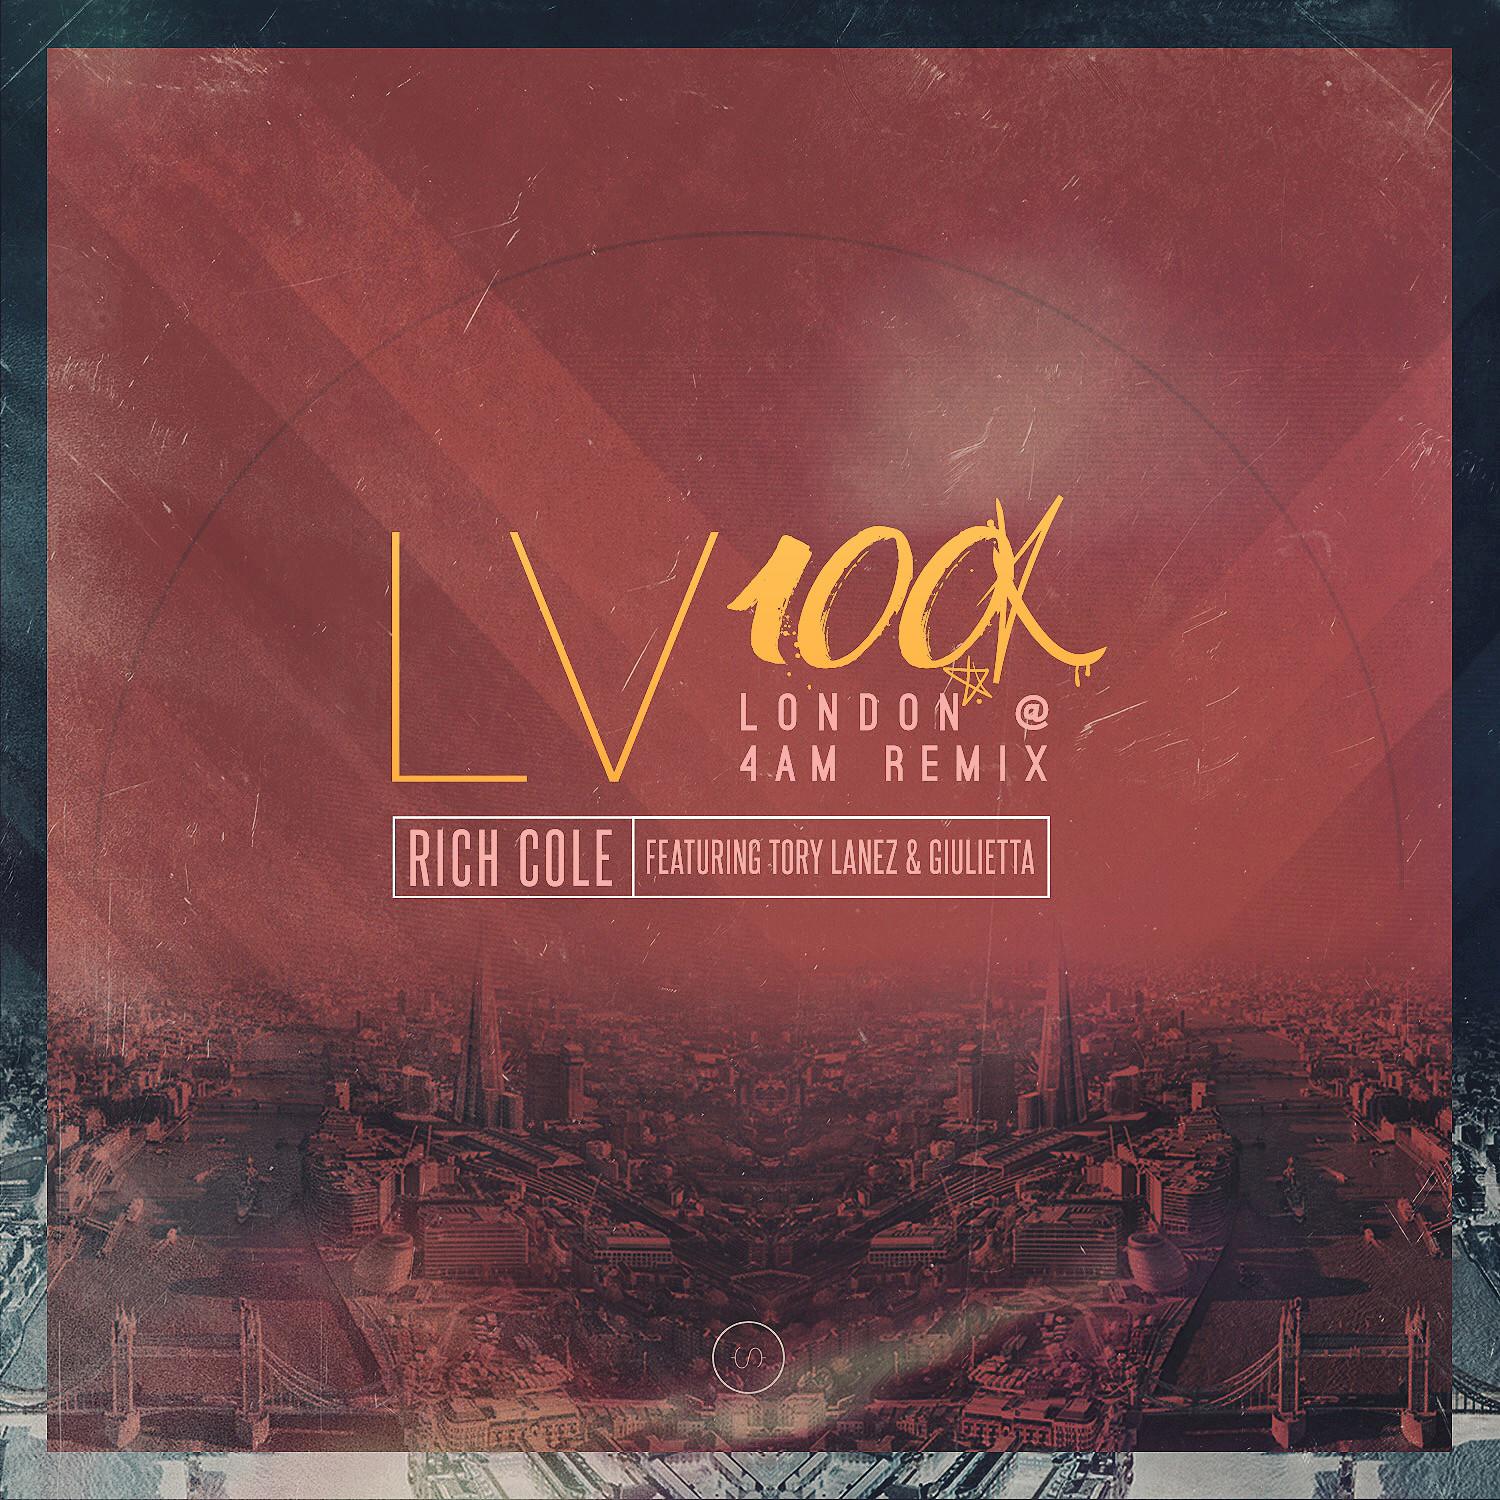 LV100K (London At 4am Remix) [feat. Tory Lanez, Giulietta] - Single